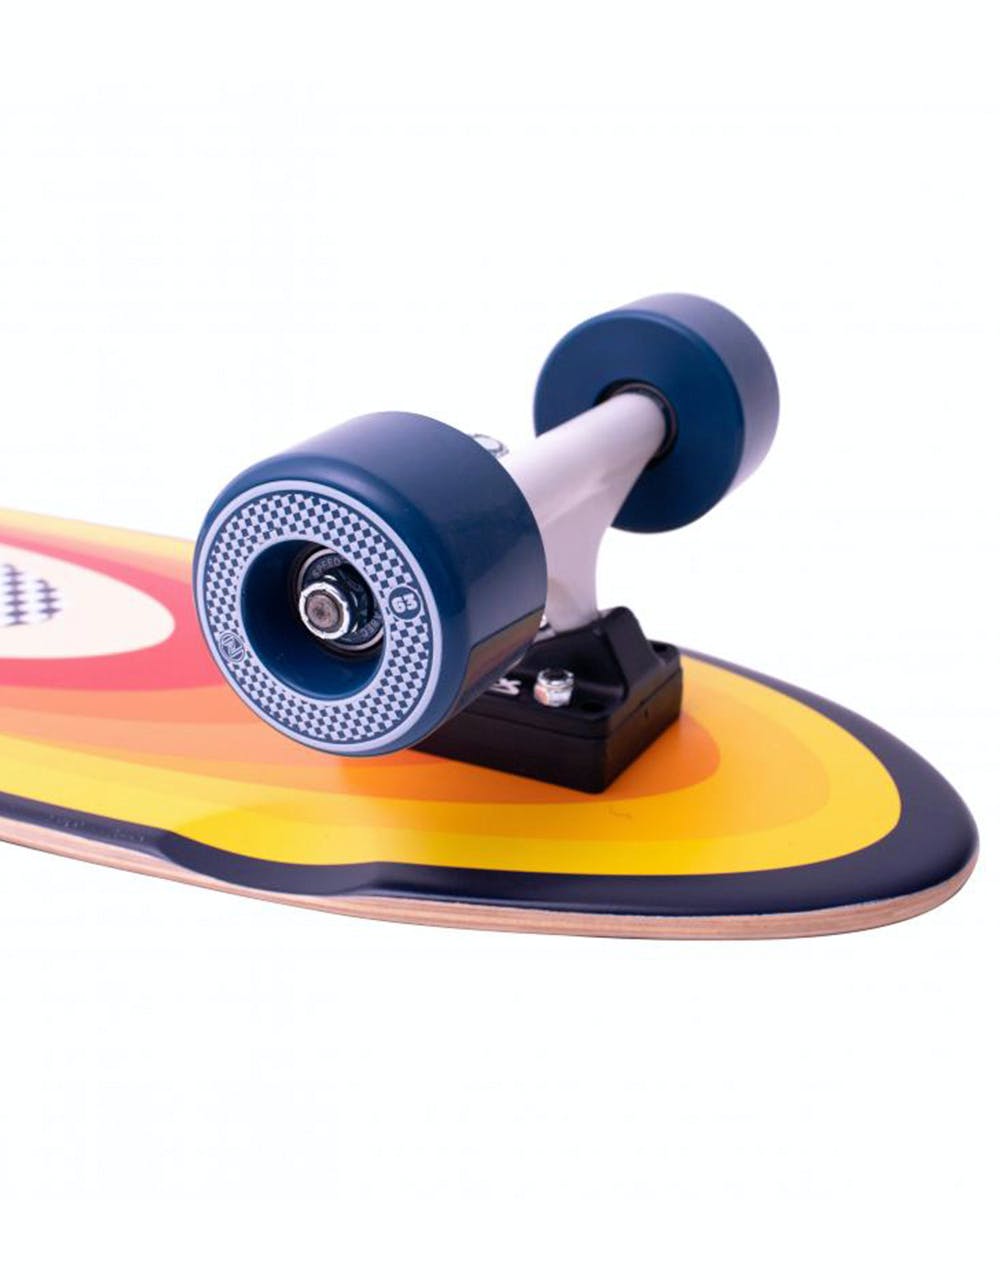 Z Flex Surf-a-gogo Cruiser Skateboard - 7.5" x 29"